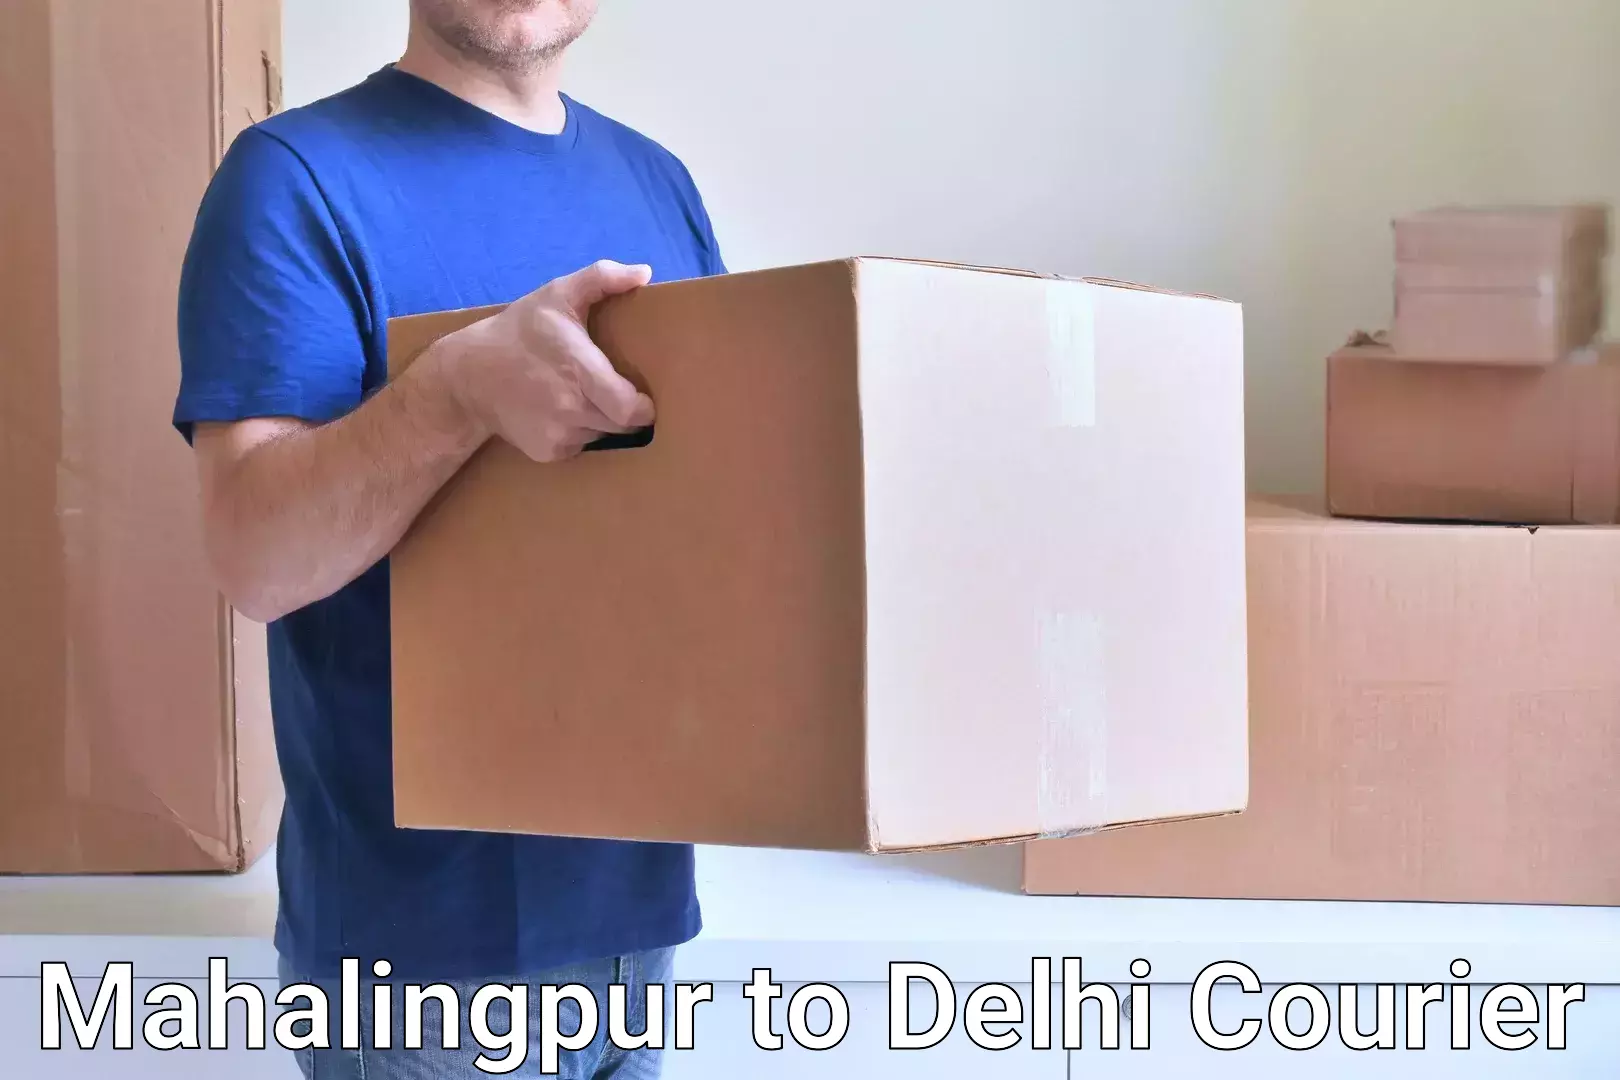 Courier service innovation Mahalingpur to Jawaharlal Nehru University New Delhi